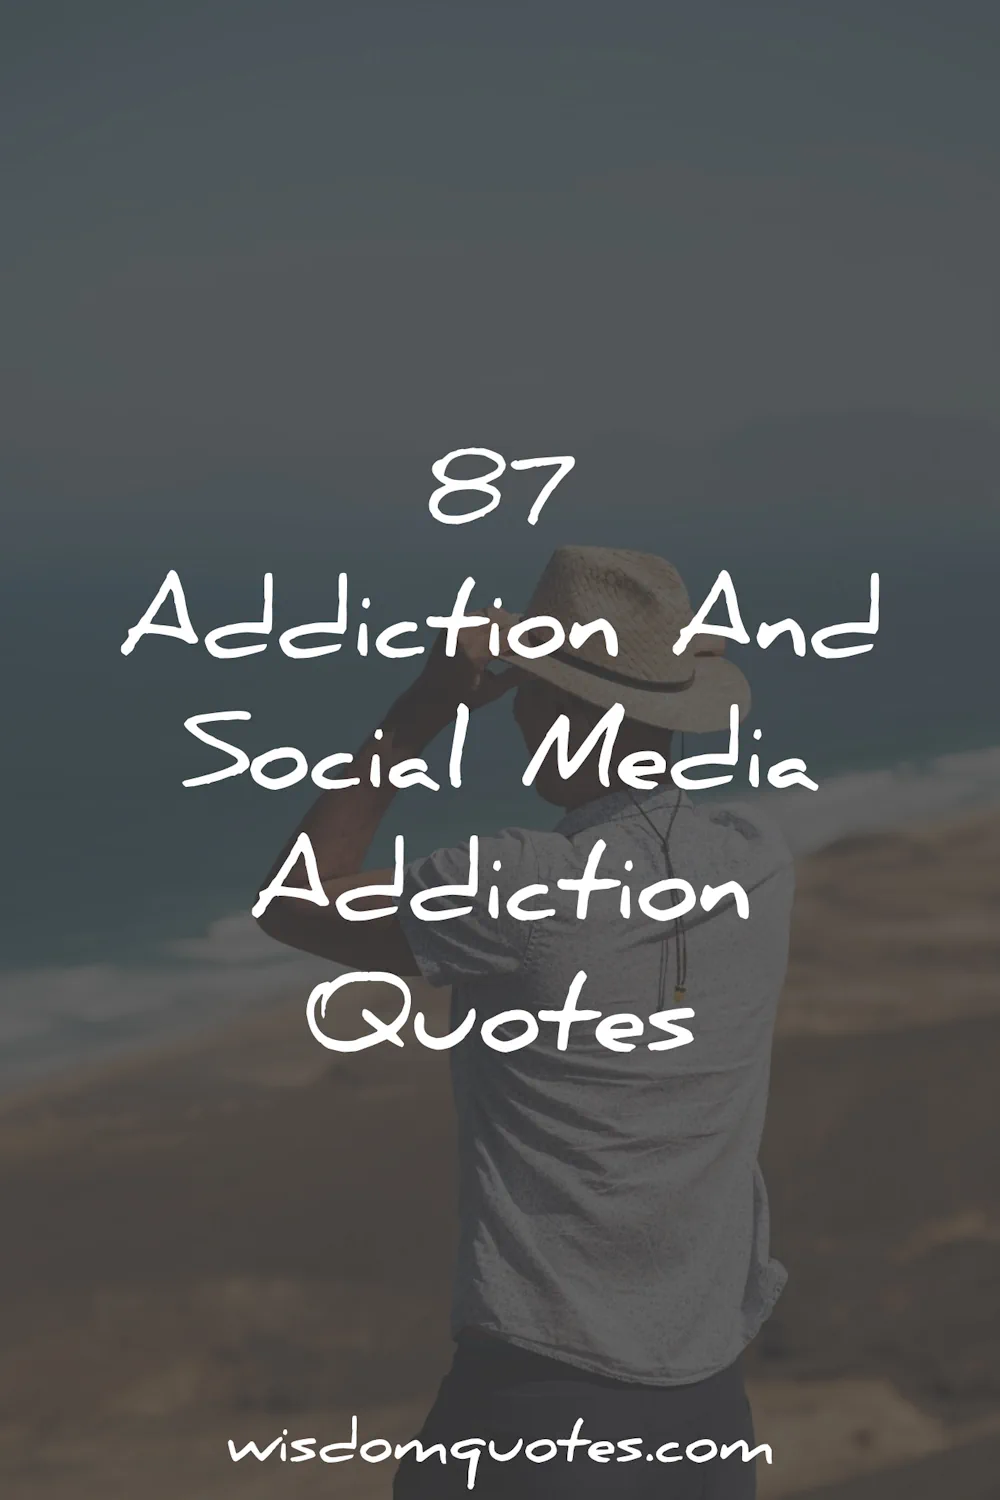 addiction social media quotes wisdom